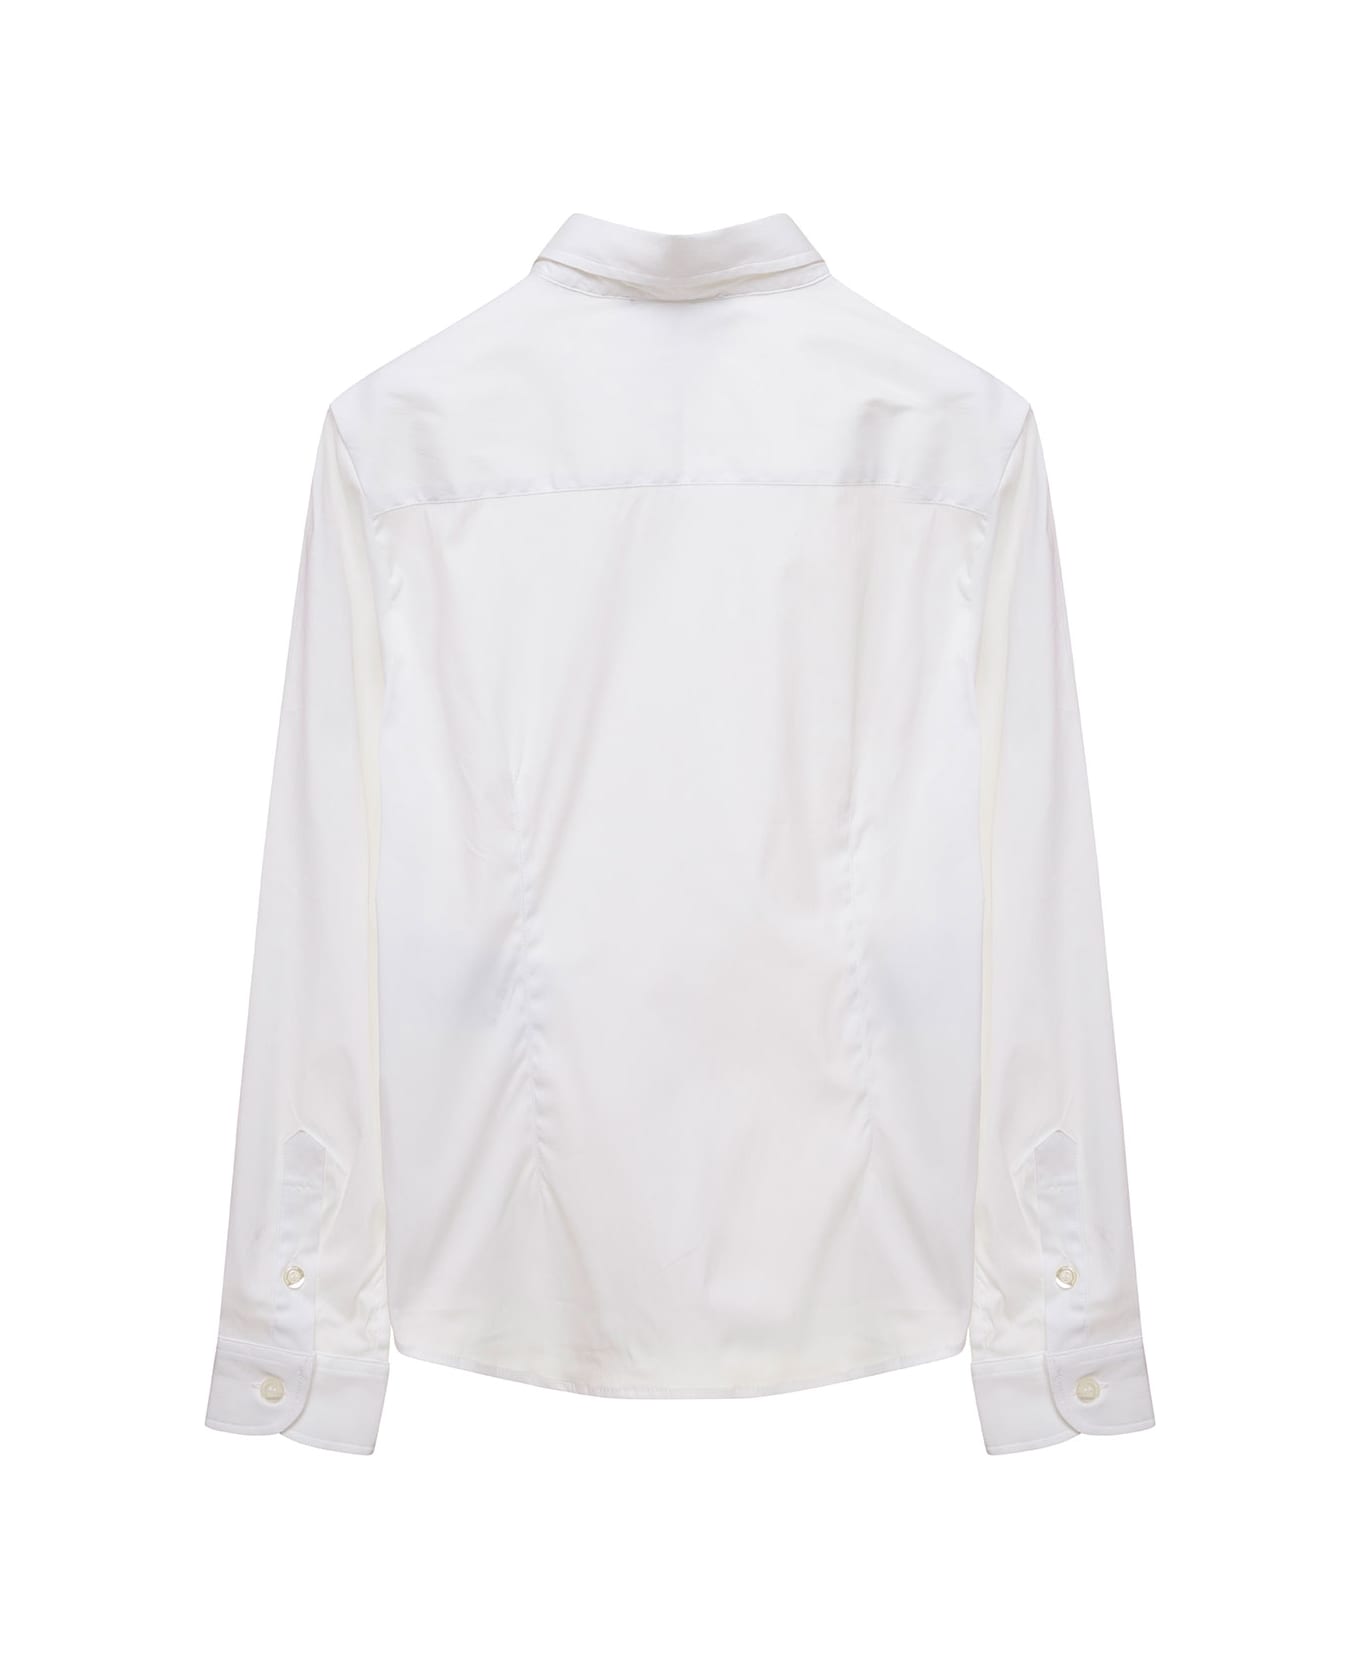 Emporio Armani White Shirt With Tonal Logo Embroidery In Stretch Cotton Blend Boy - White シャツ